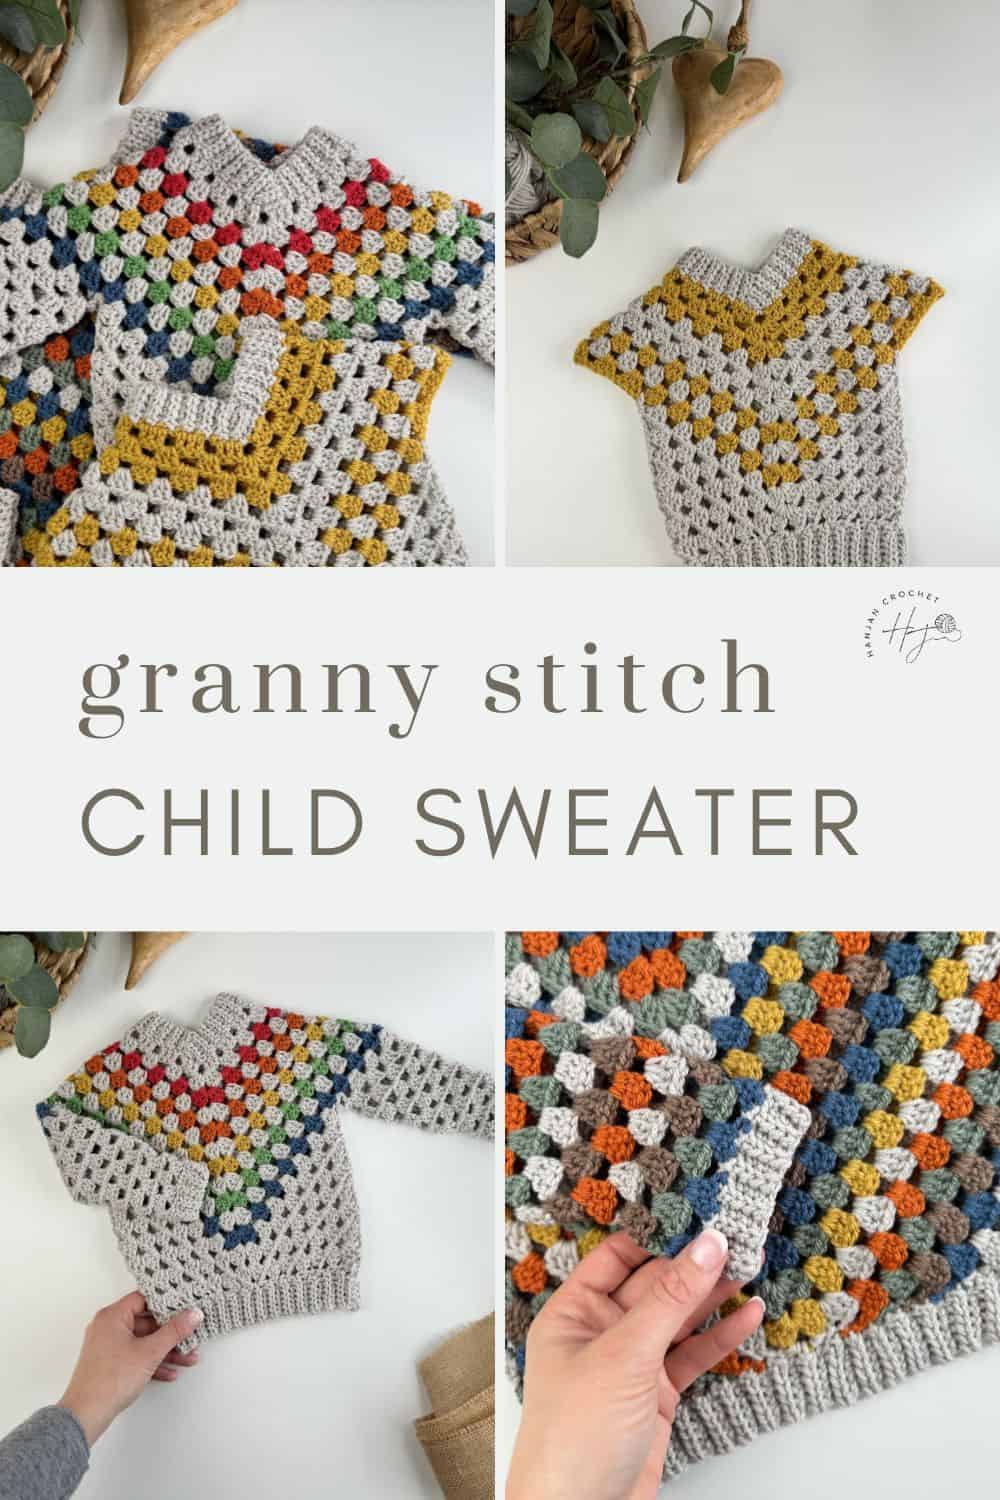 Child's granny stitch sweater.